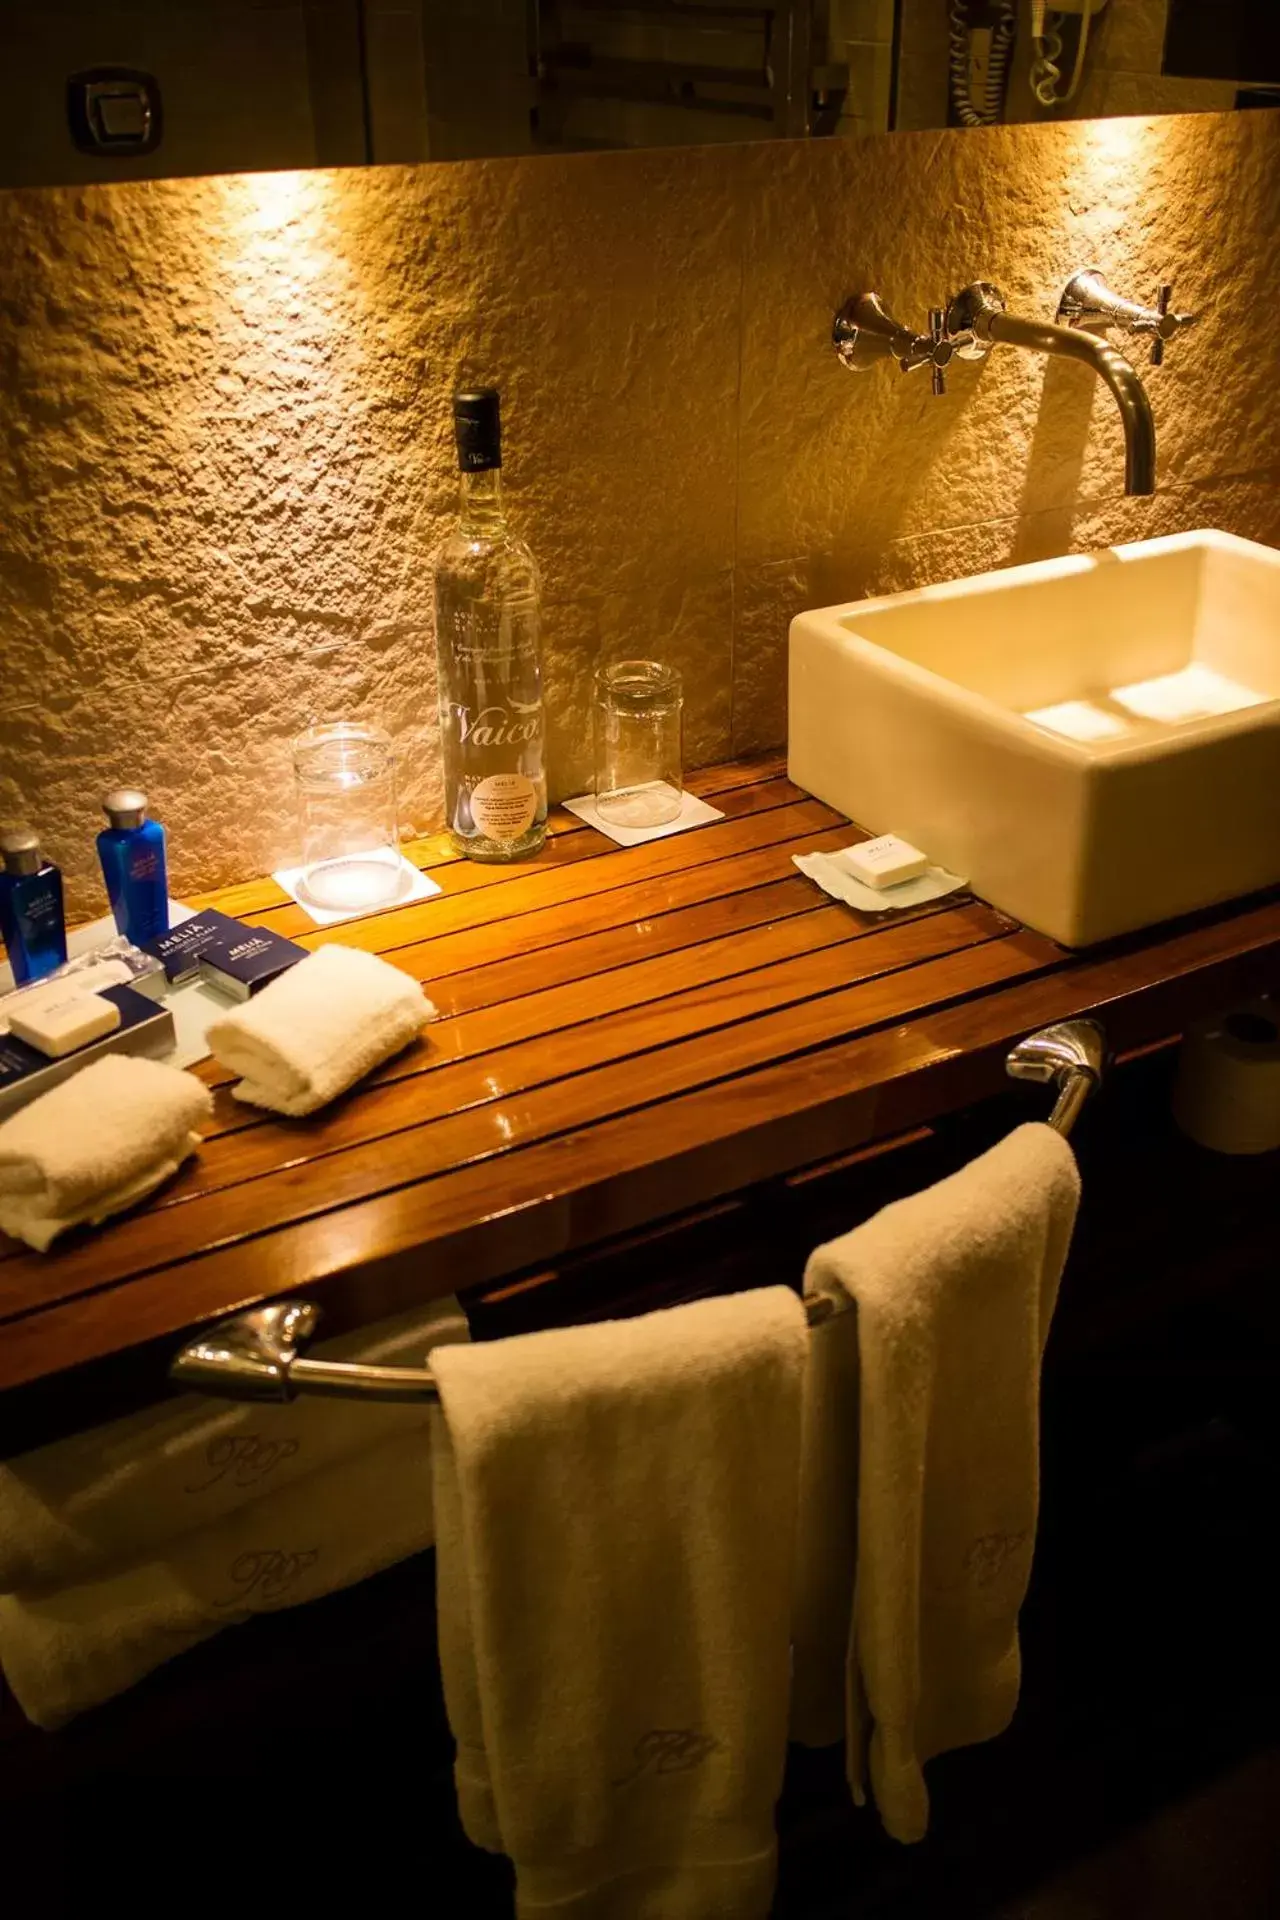 Bathroom in Melia Recoleta Plaza Hotel